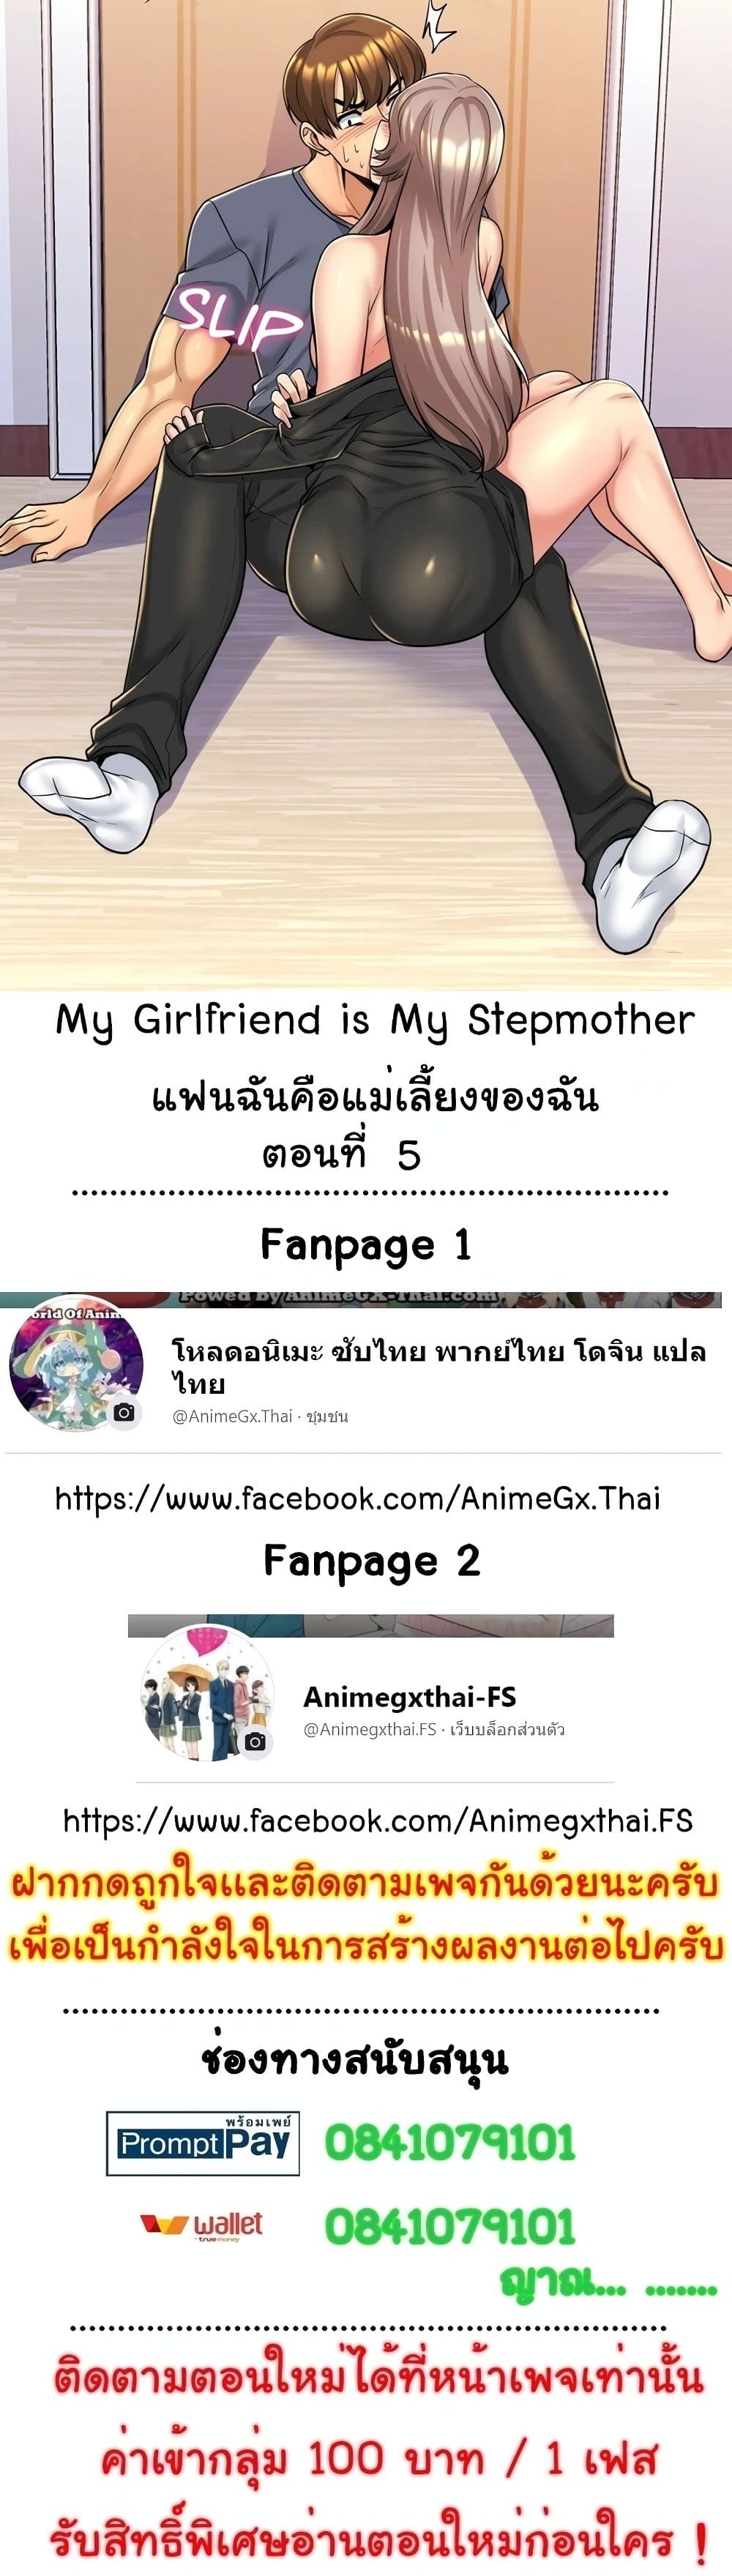 My Girlfriend is My Stepmother5 (1)